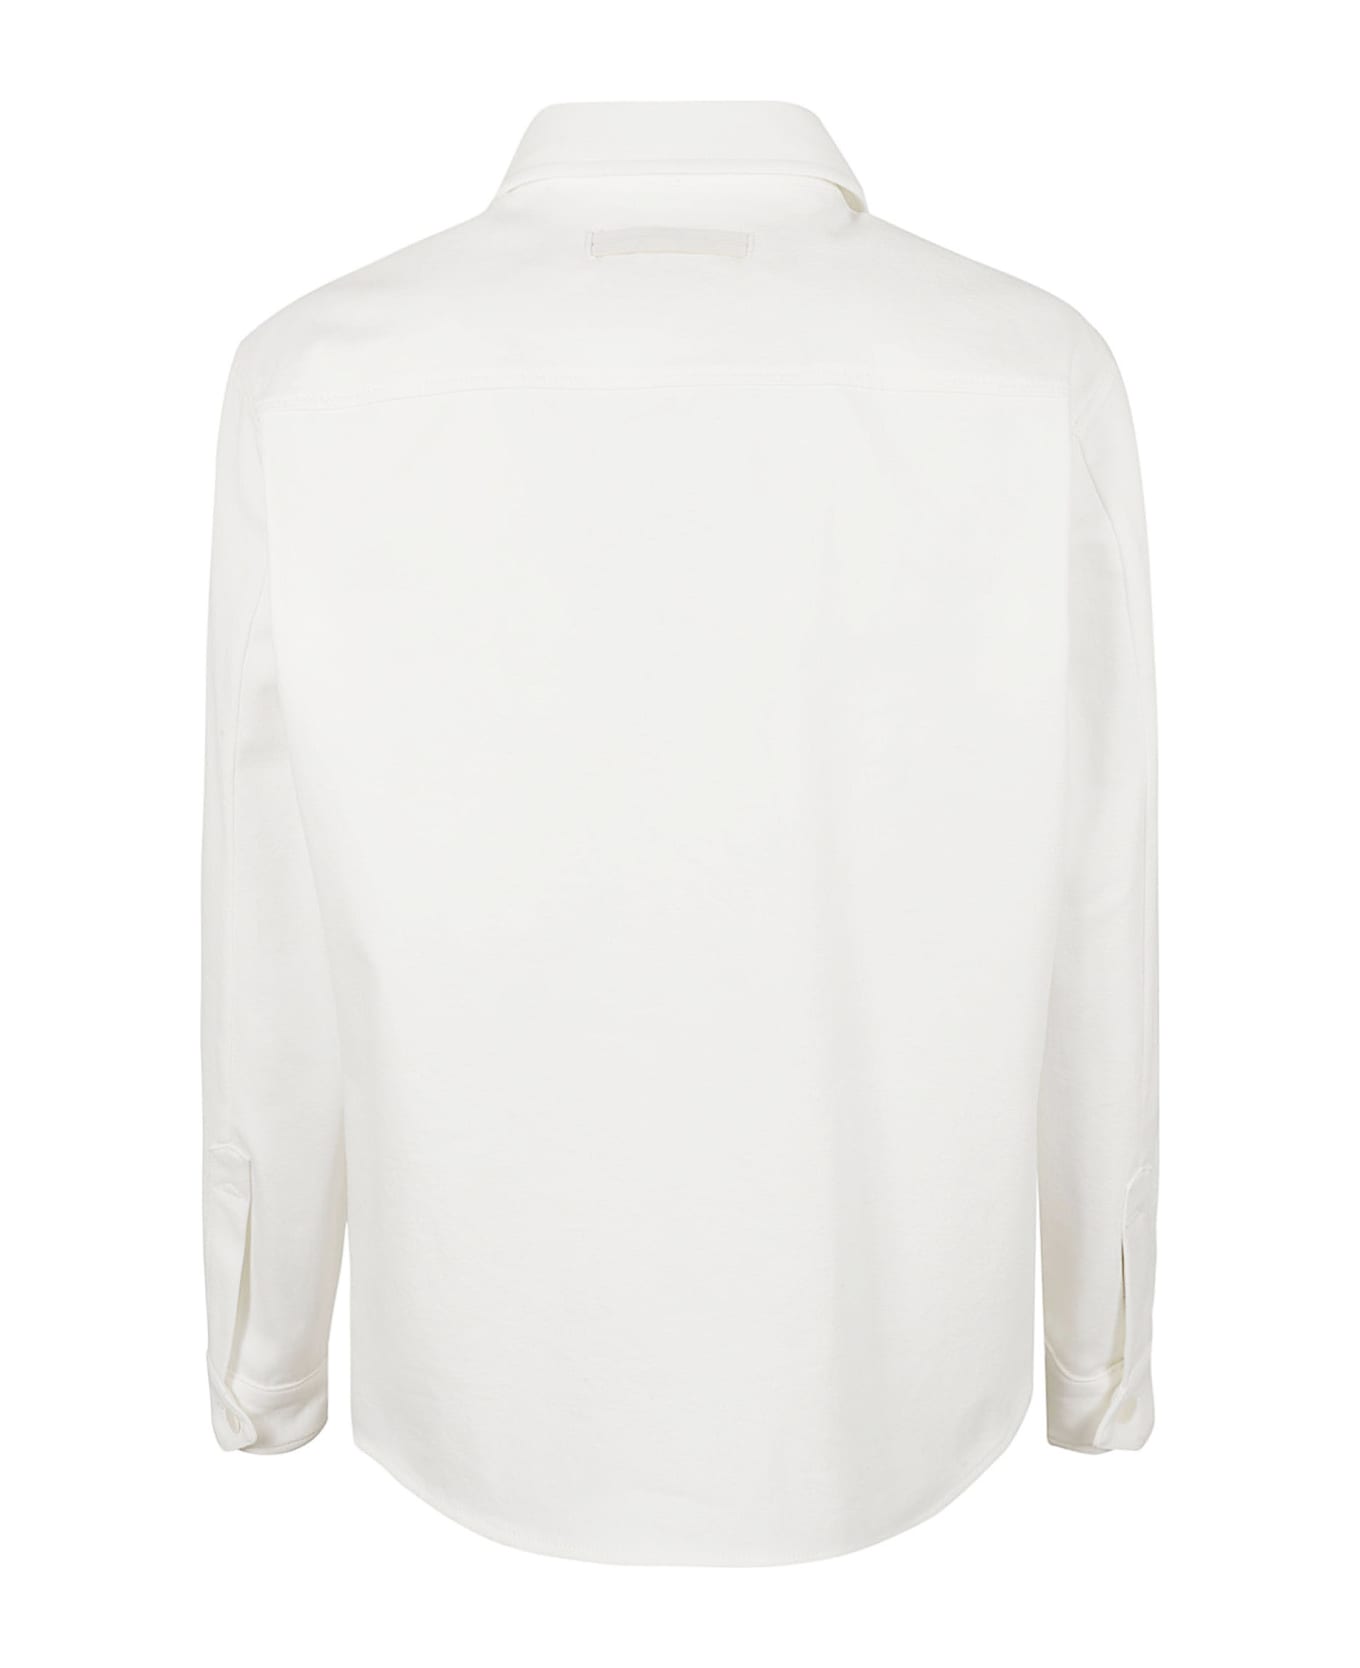 Zegna New Classic Comfort Jacket - White シャツ